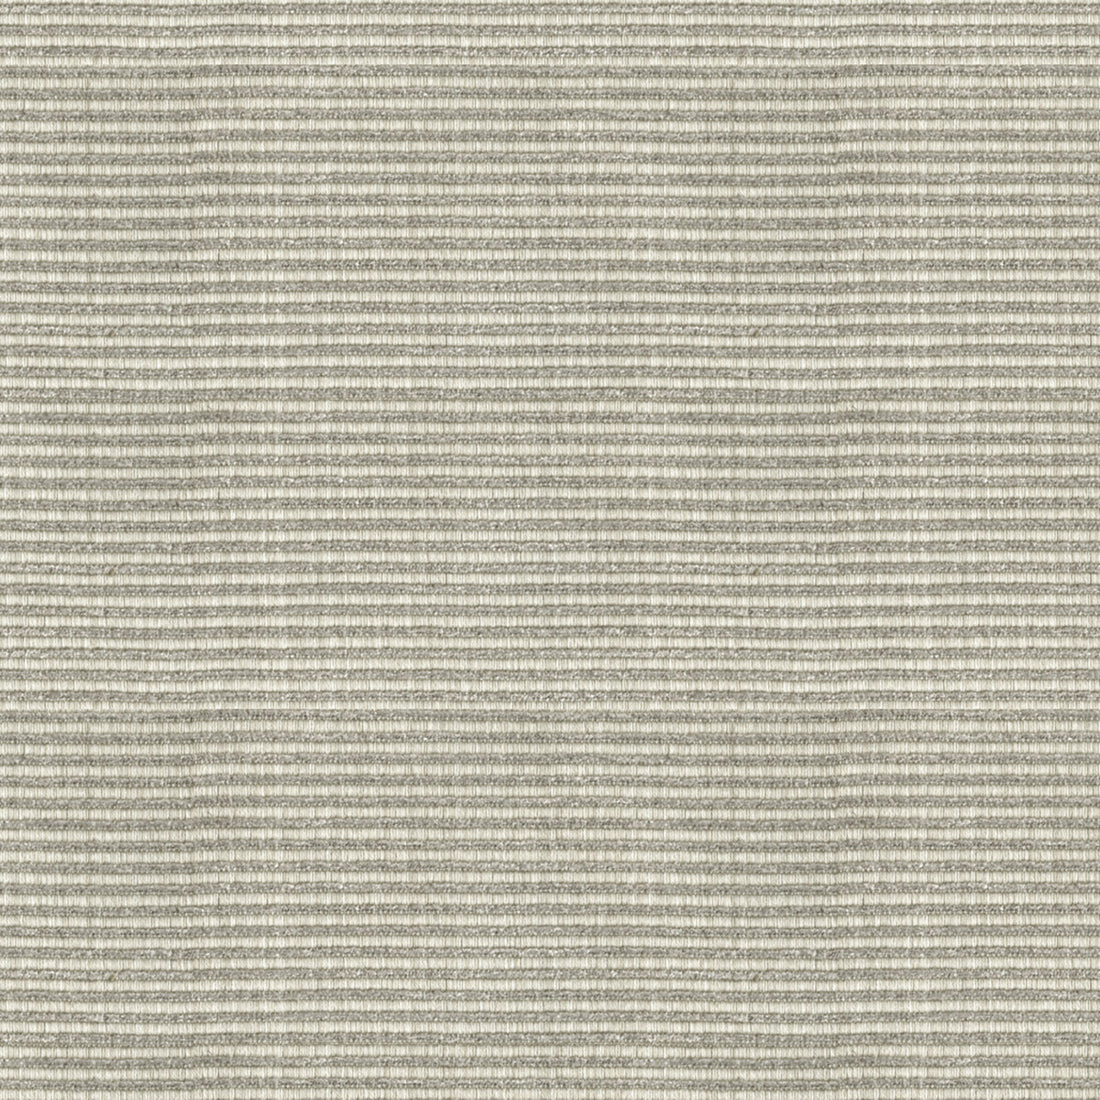 Kravet Smart fabric in 32946-1116 color - pattern 32946.1116.0 - by Kravet Smart